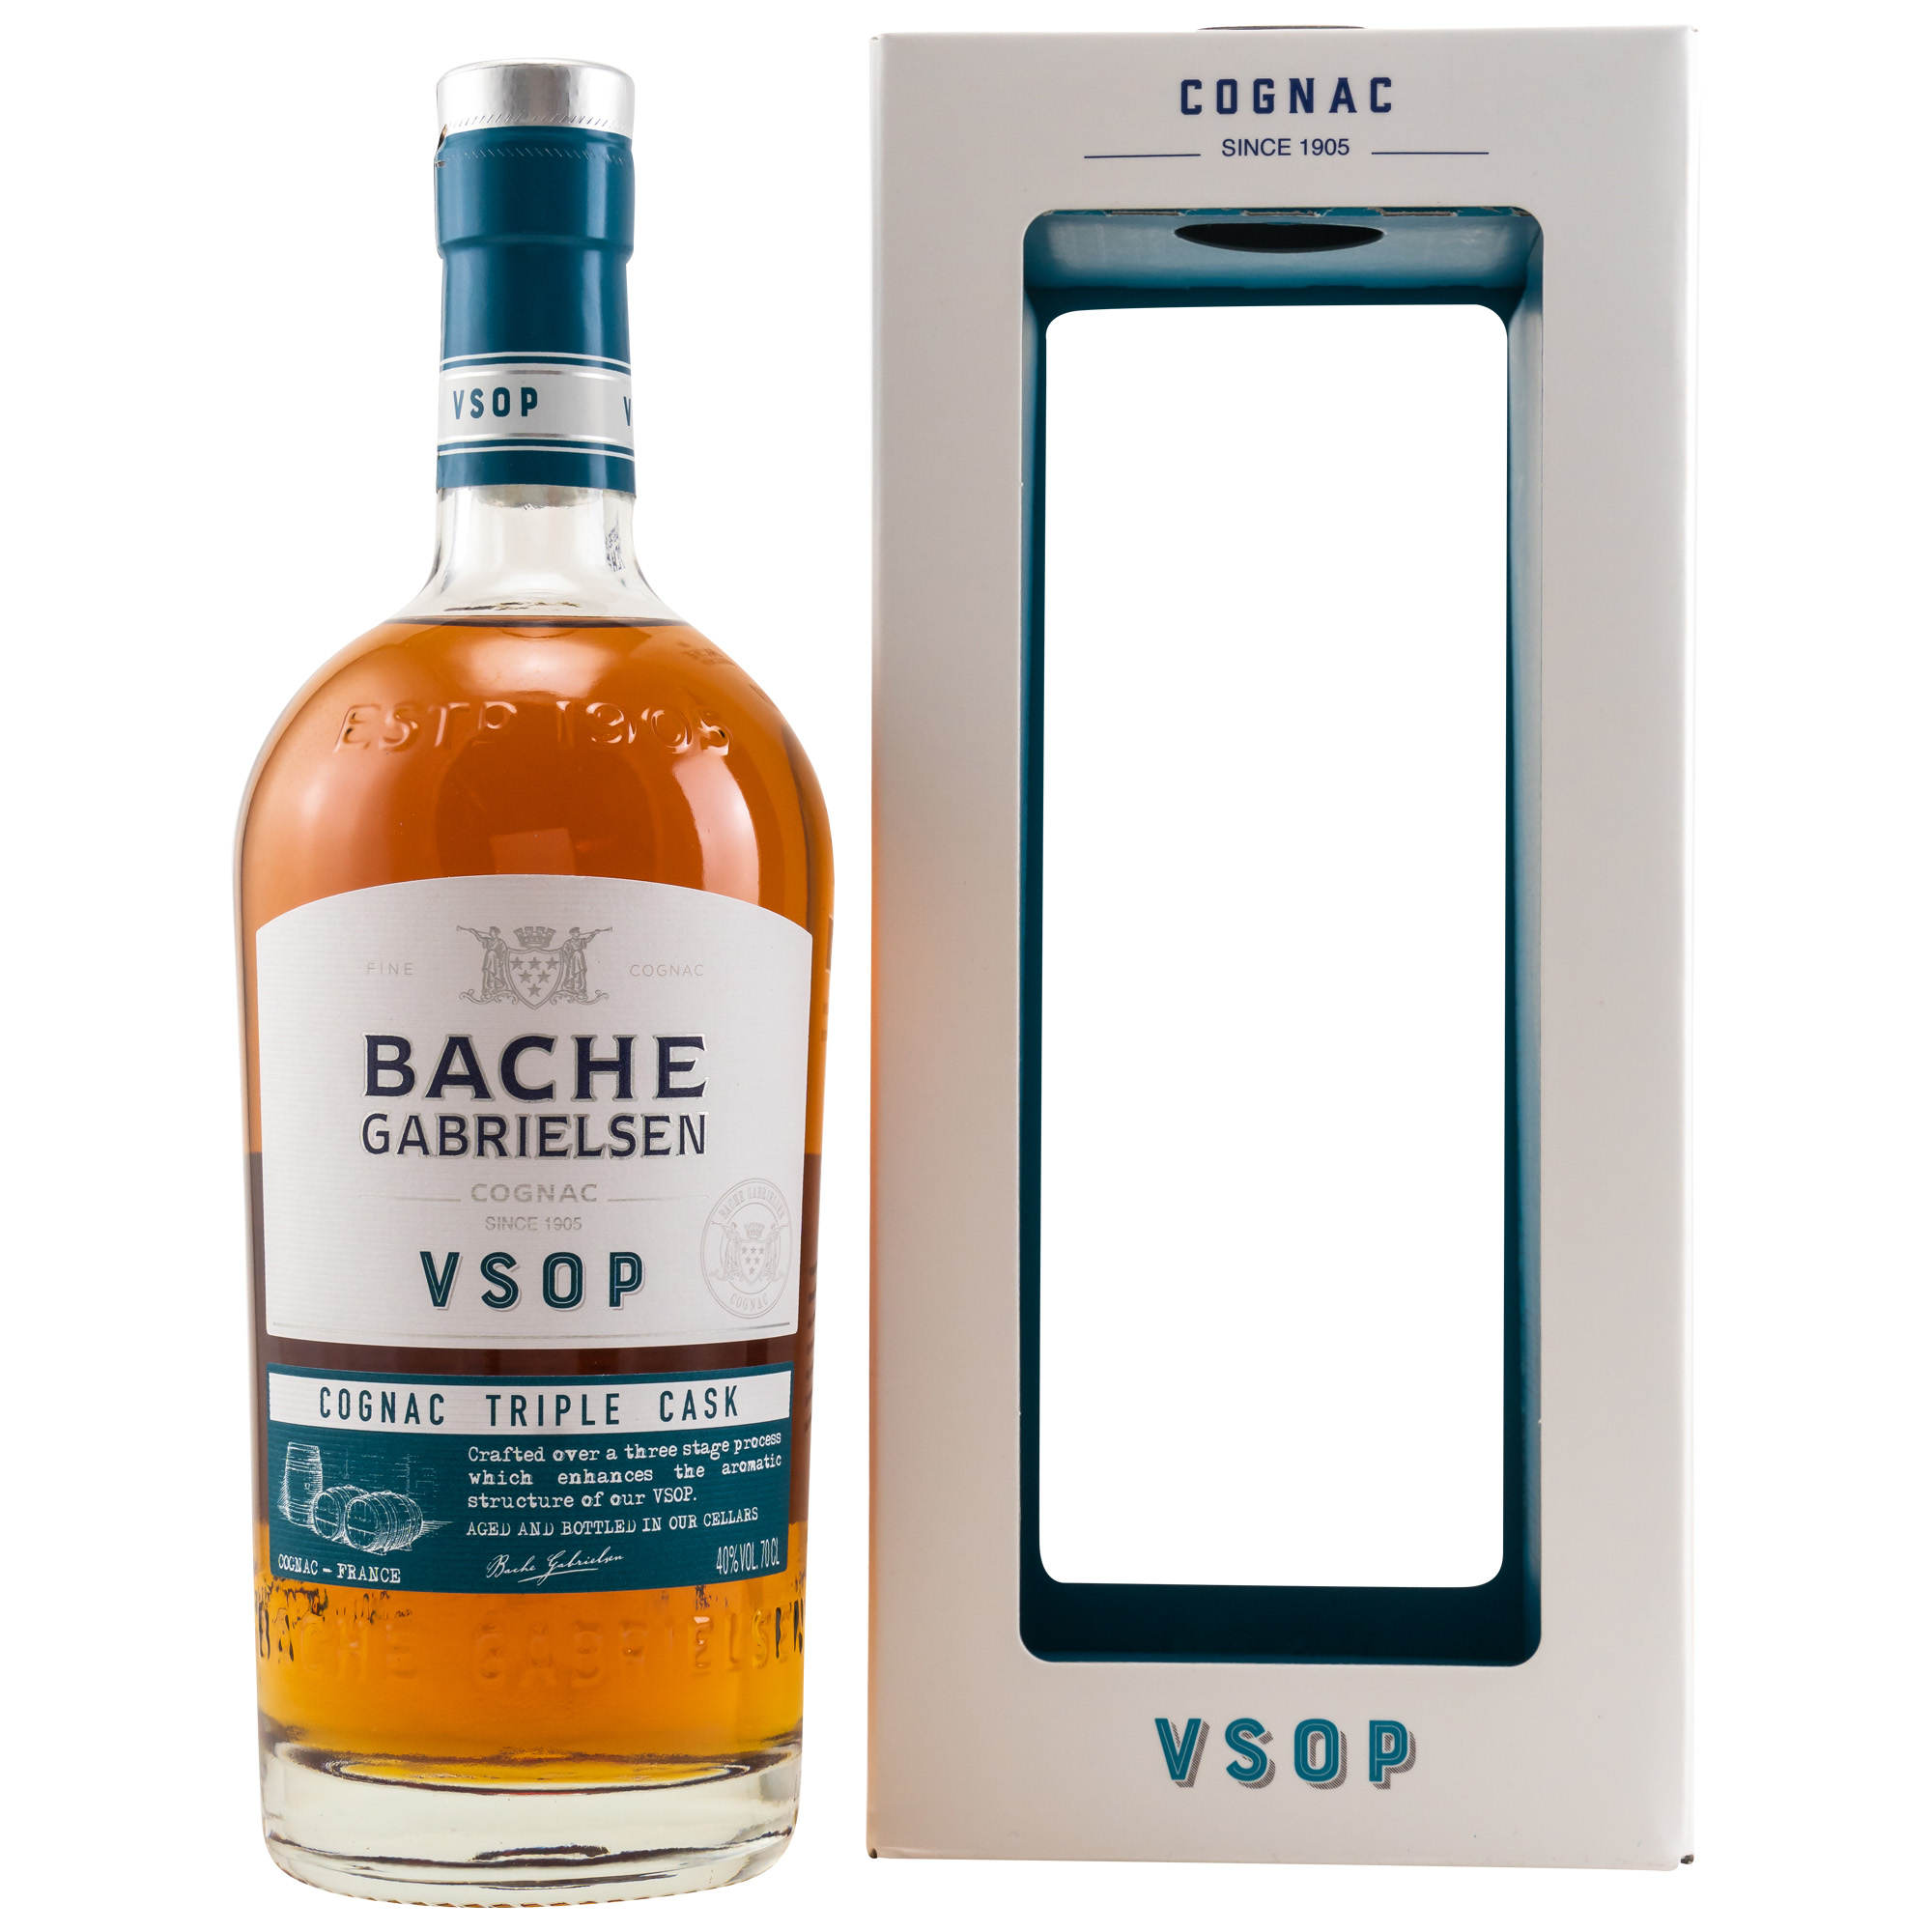 Bache-Gabrielsen VSOP Cognac Triple Cask 0,7 ltr. 40% Vol. GEPA